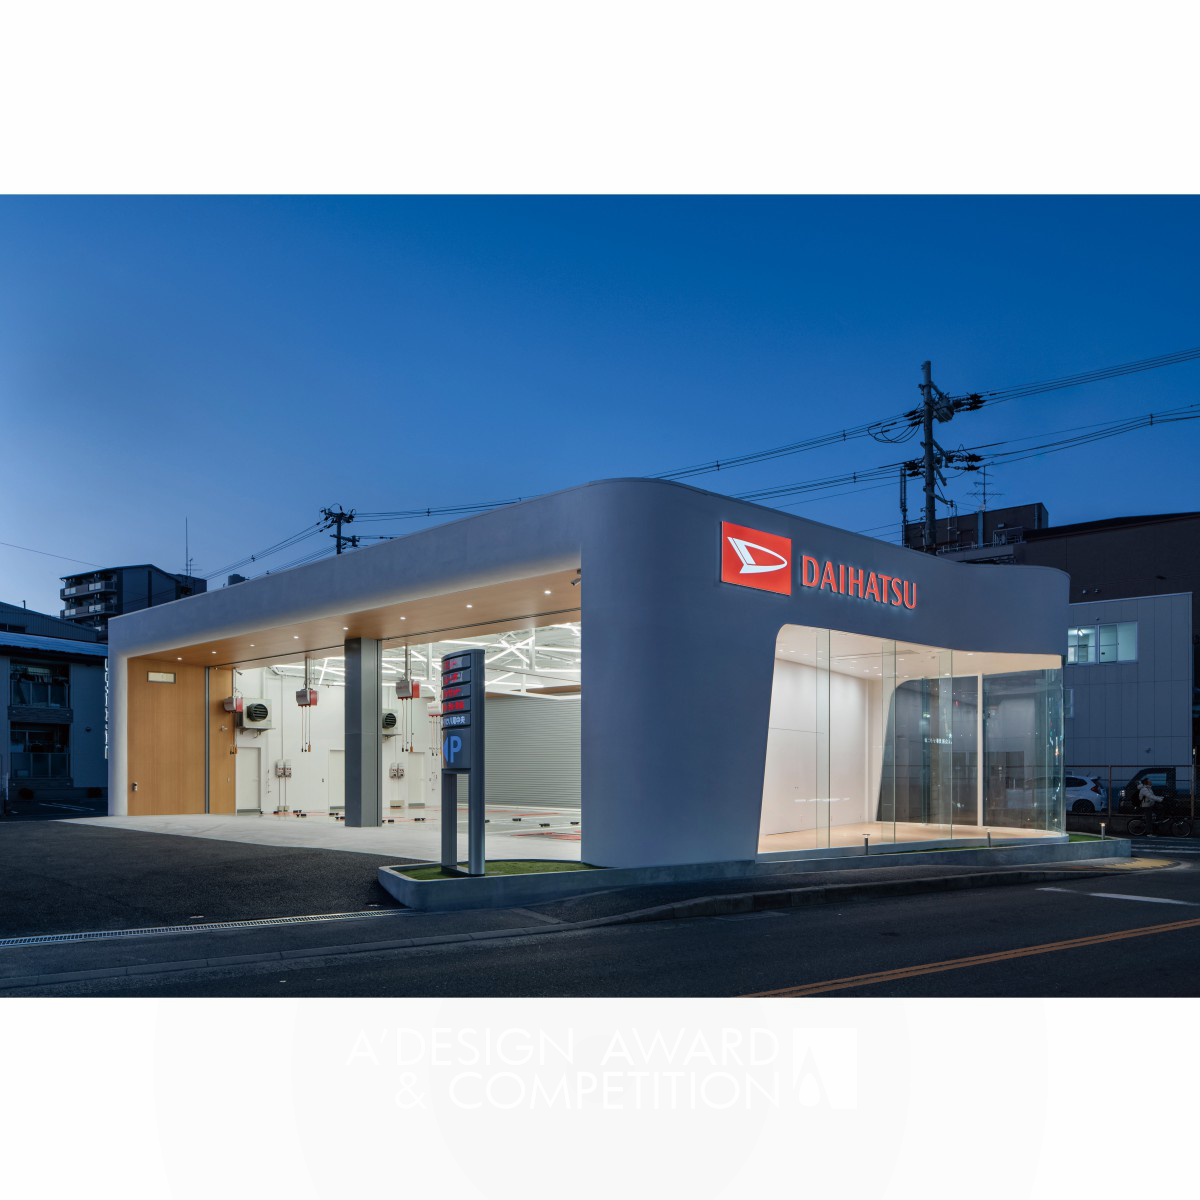 SHUNSUKE OHE wins Iron at the prestigious A' Architecture, Building and Structure Design Award with Daihatsu Auto Repair Shop.